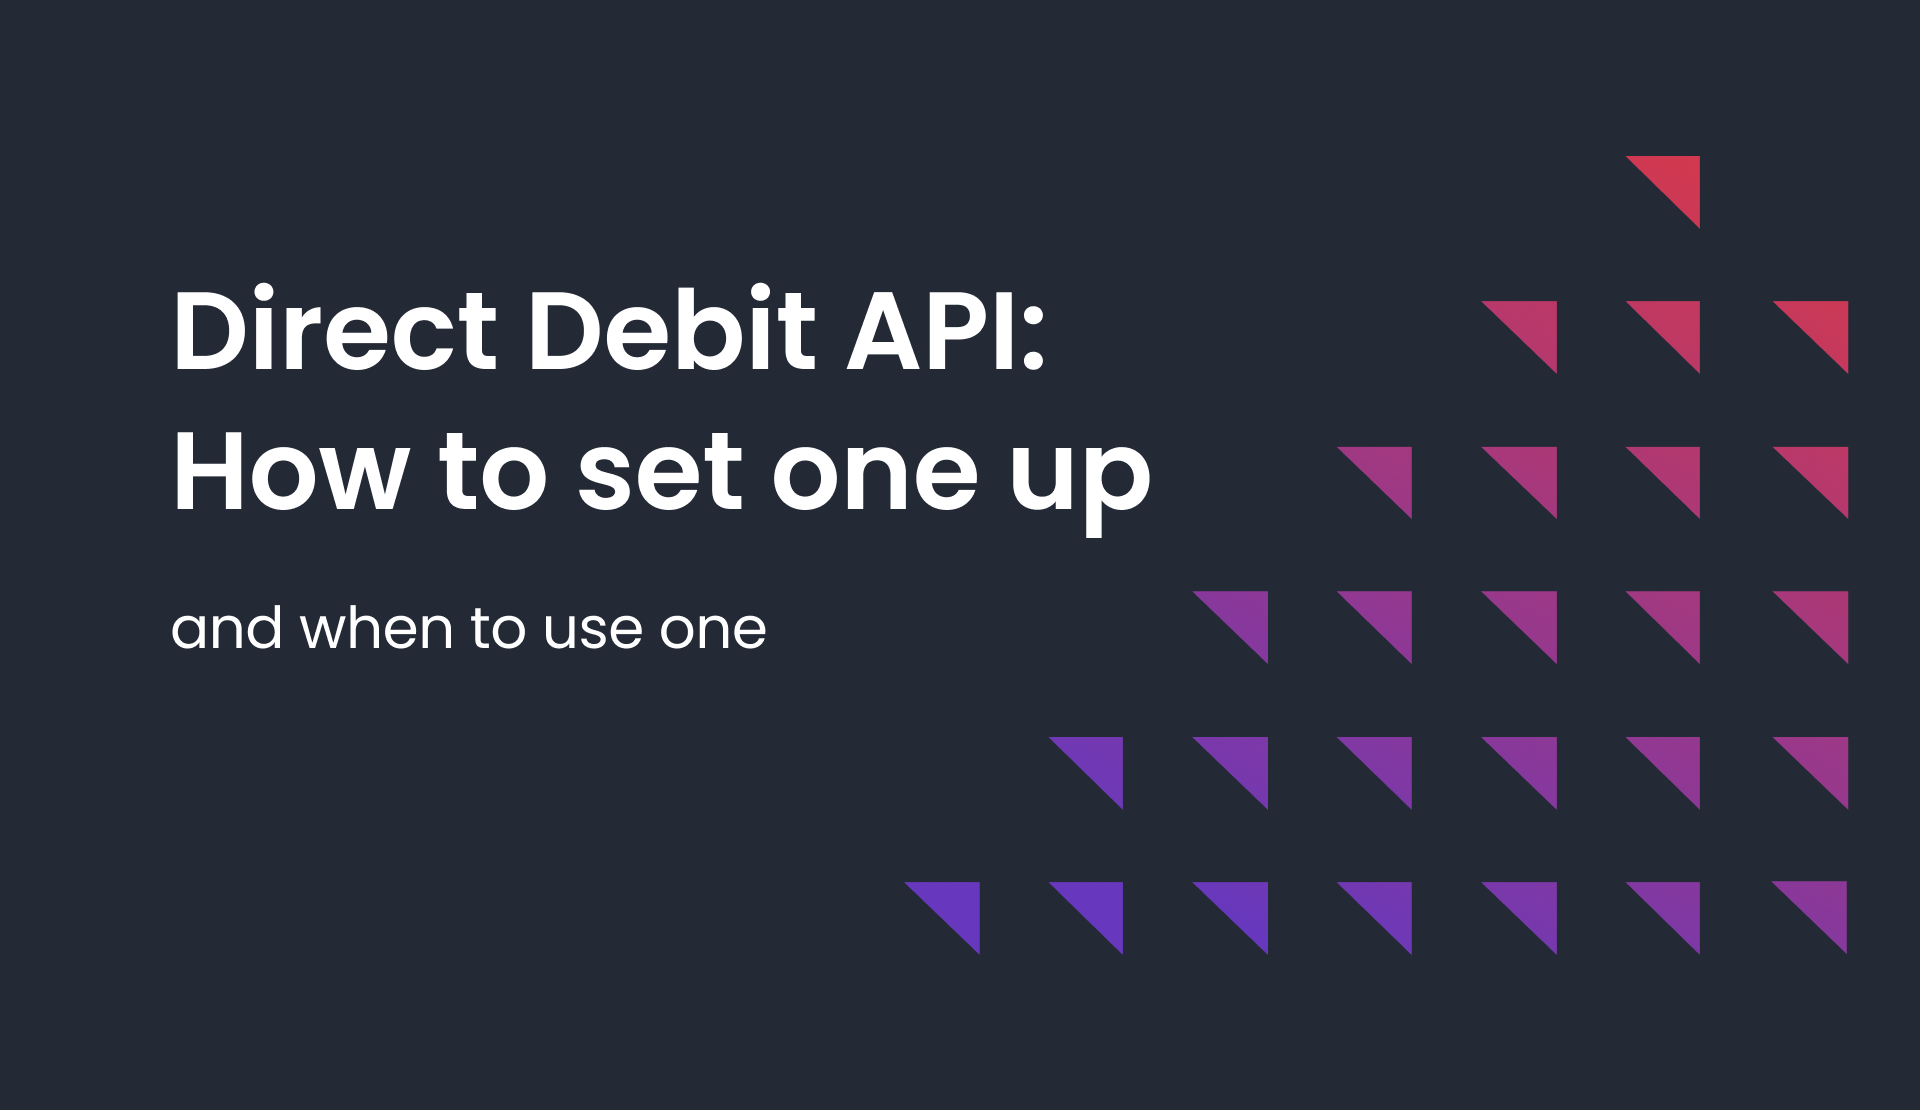 Direct Debit API